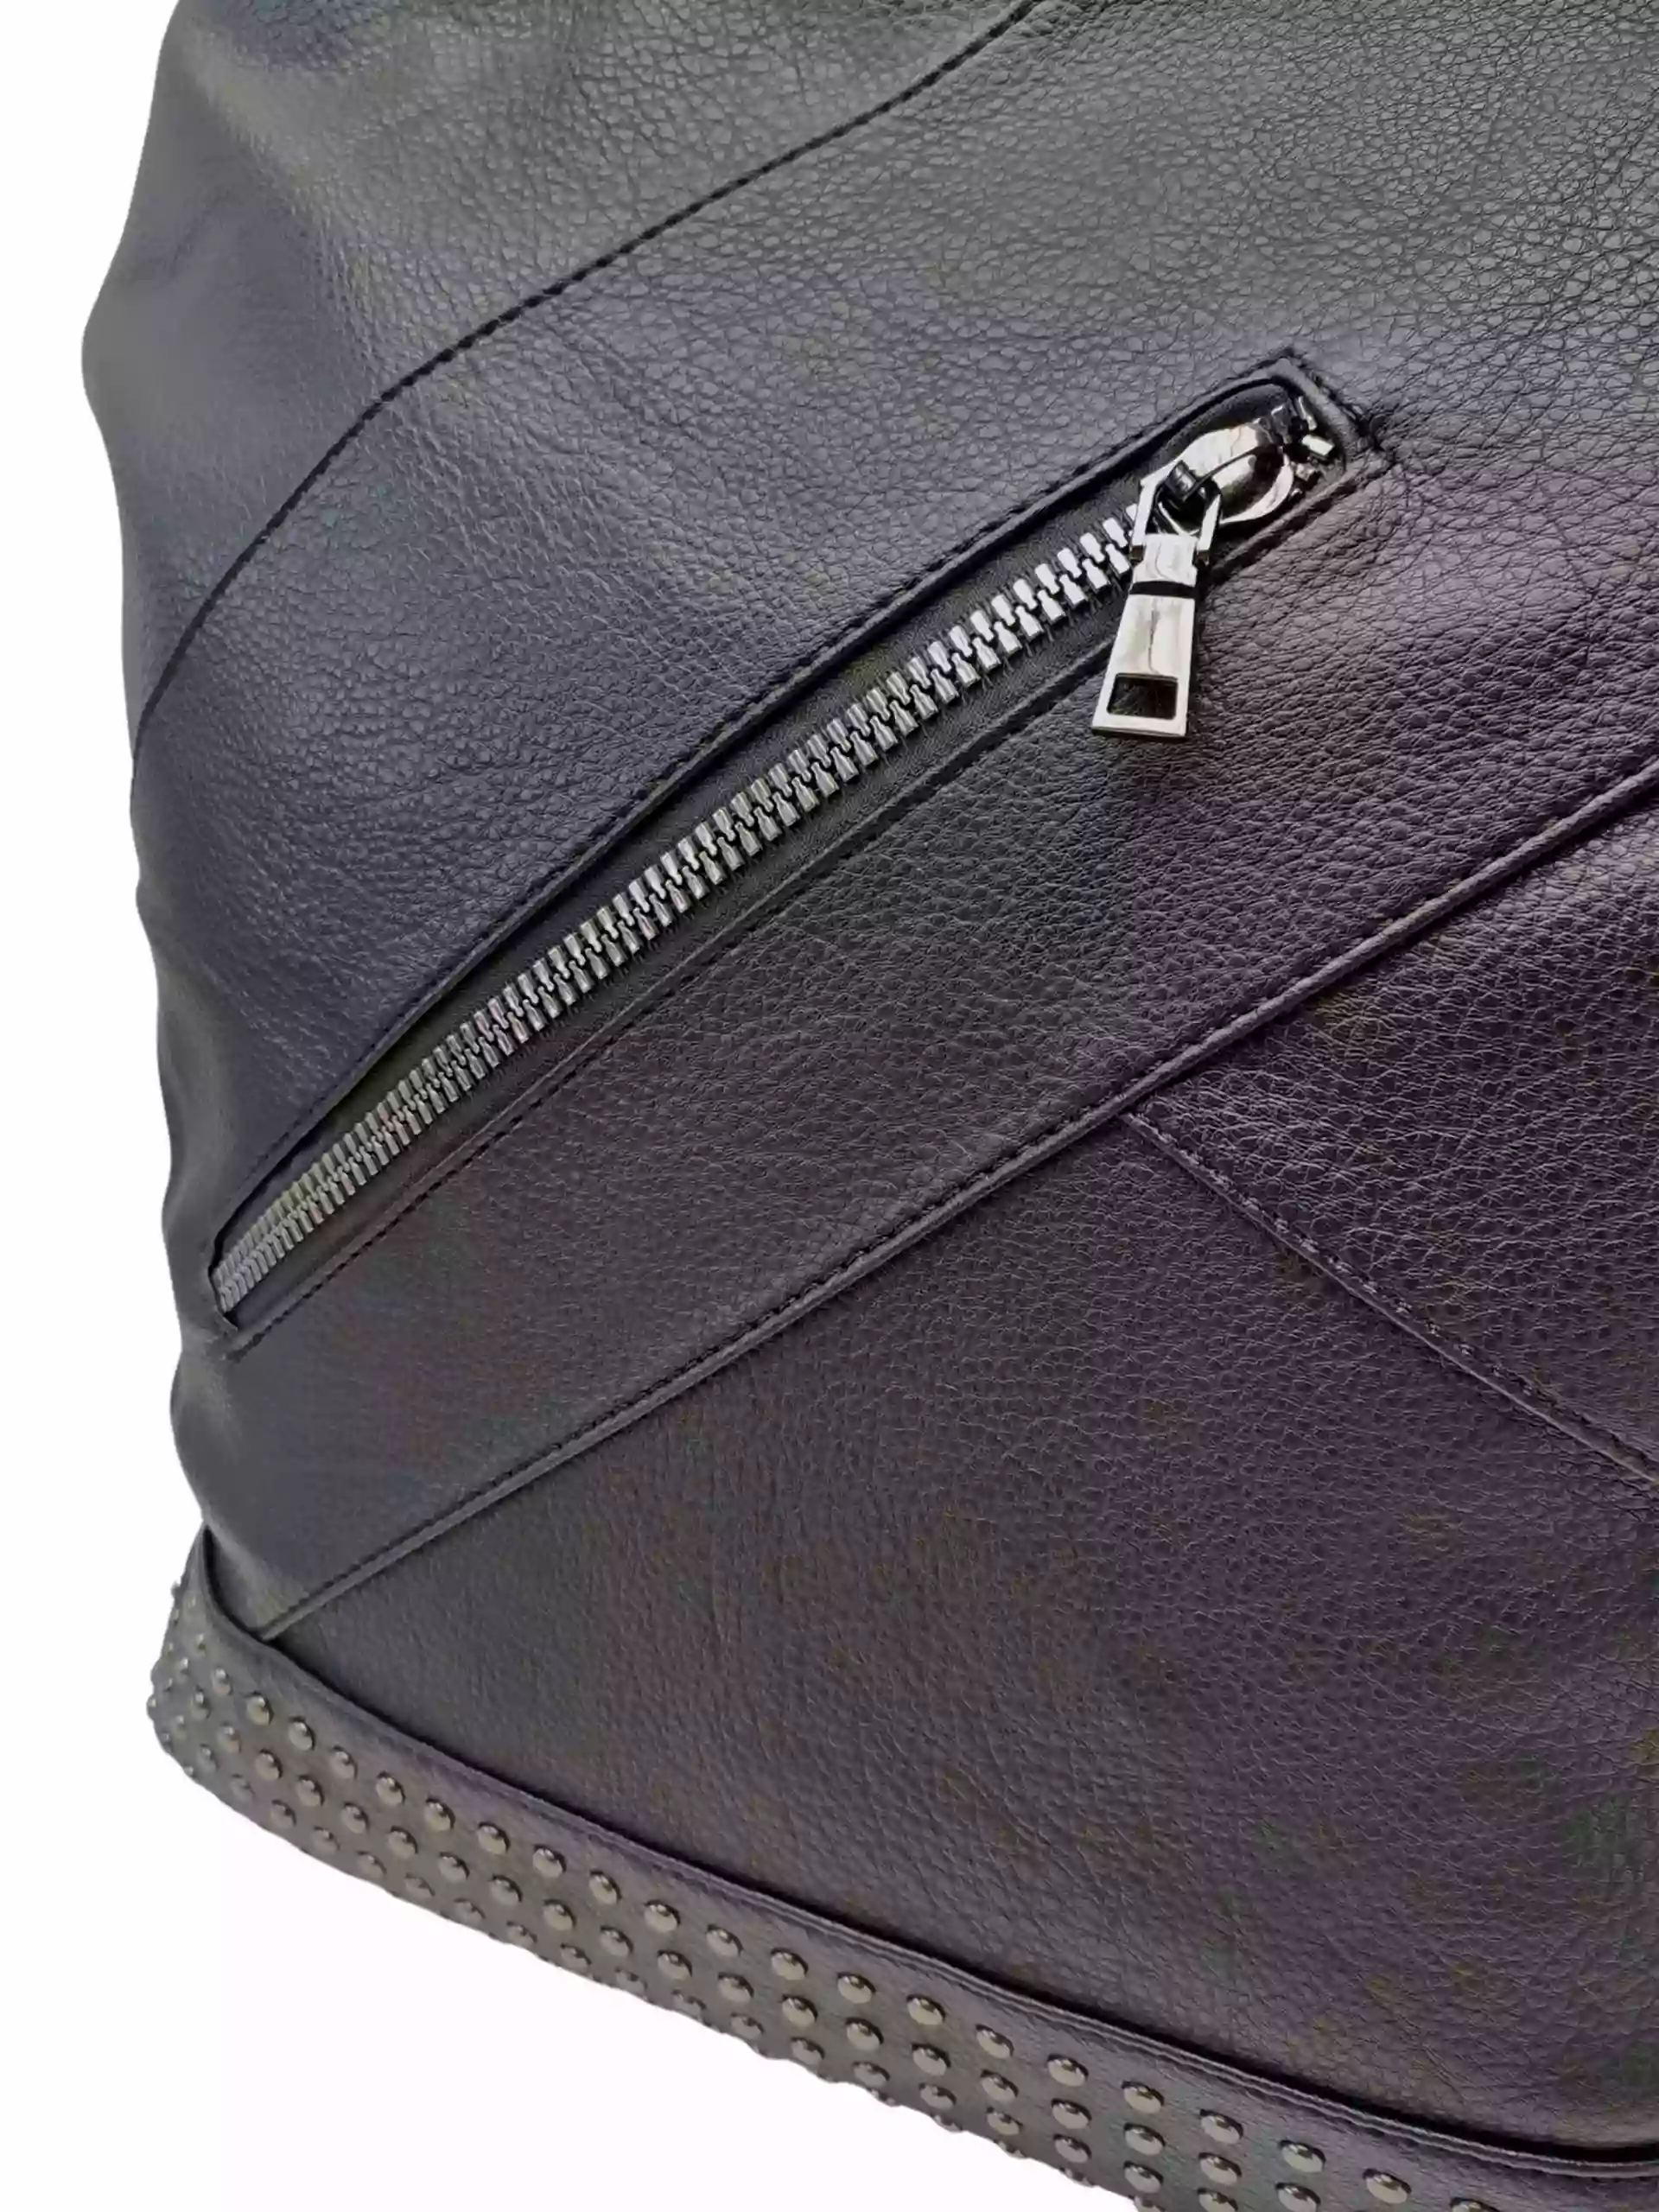 Velký černý kabelko-batoh 2v1 s šikmými vzory, Co & Coo Fashion, 0956, detail kabelko-batohu 2v1